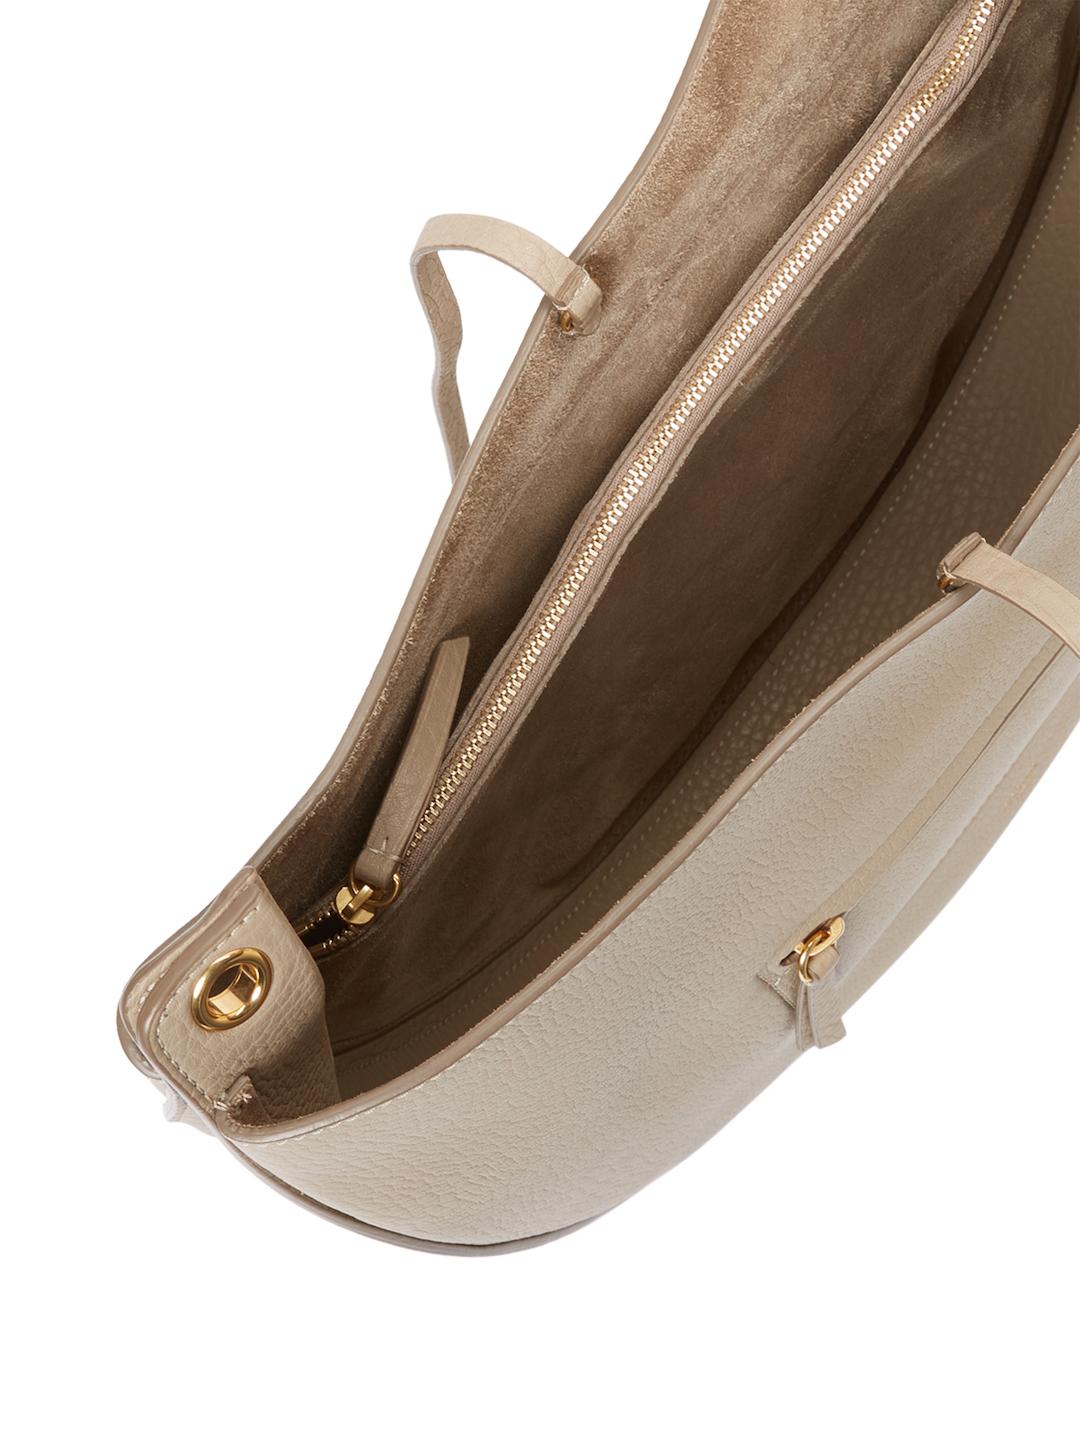 Celine Zip Calfskin Leather Hobo Bag in Natural | Lyst